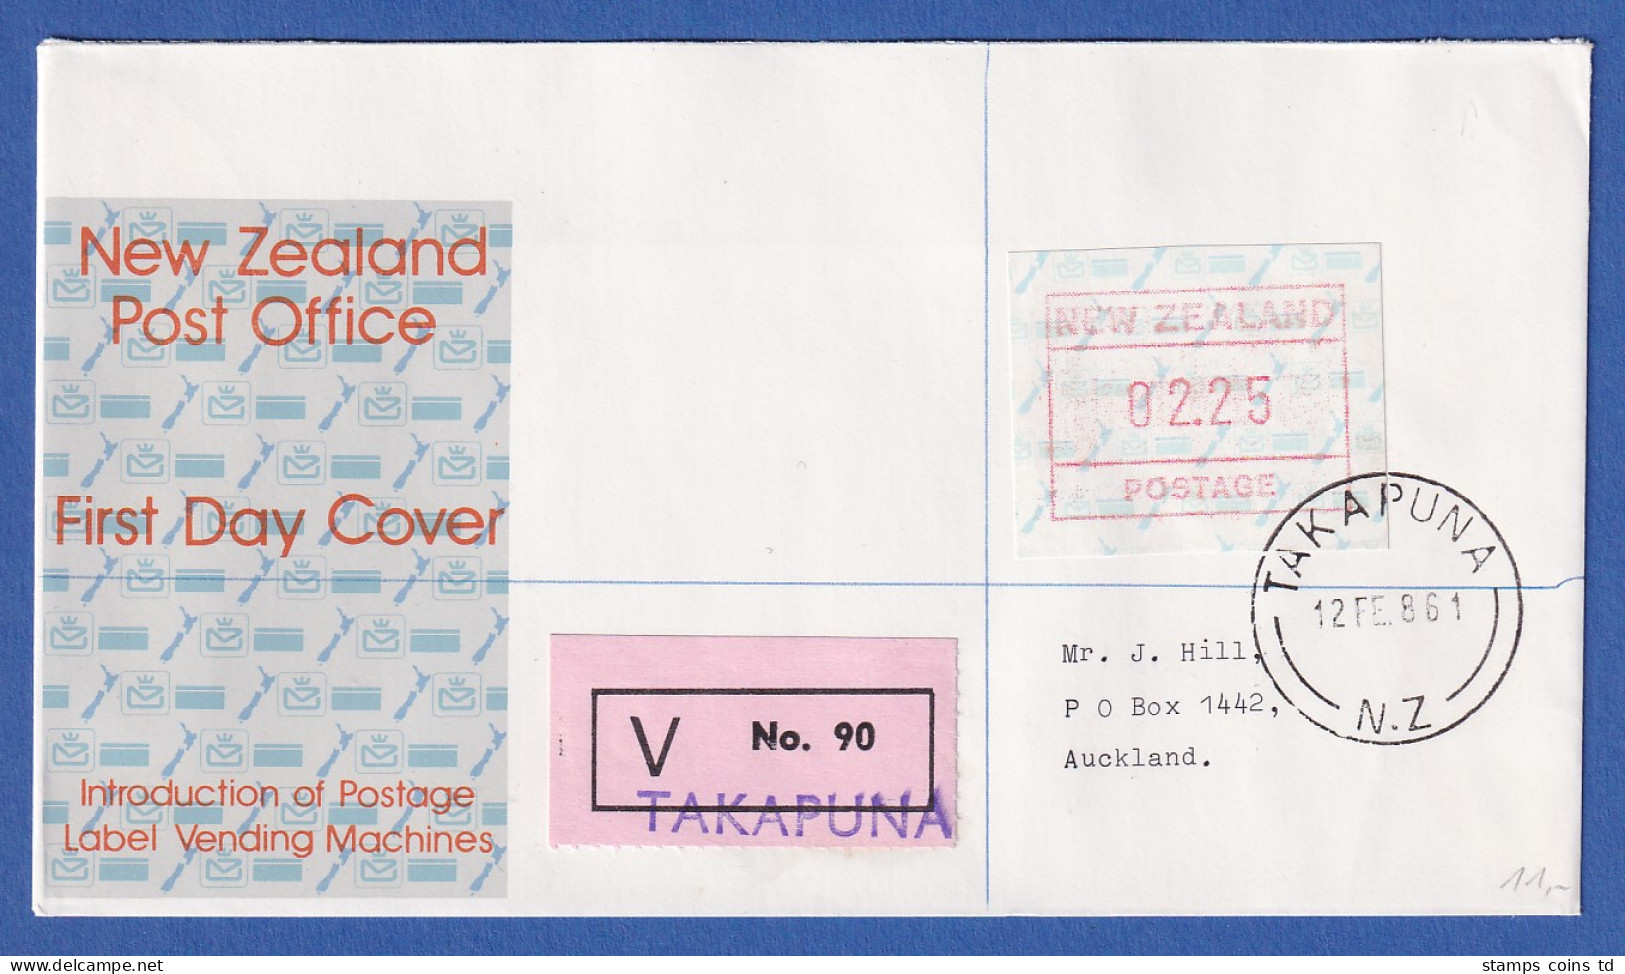 Neuseeland Frama-ATM 2. Ausg. 1986 Wert 02,25 Auf Lp-V-FDC, O Takapuna  - Lots & Serien